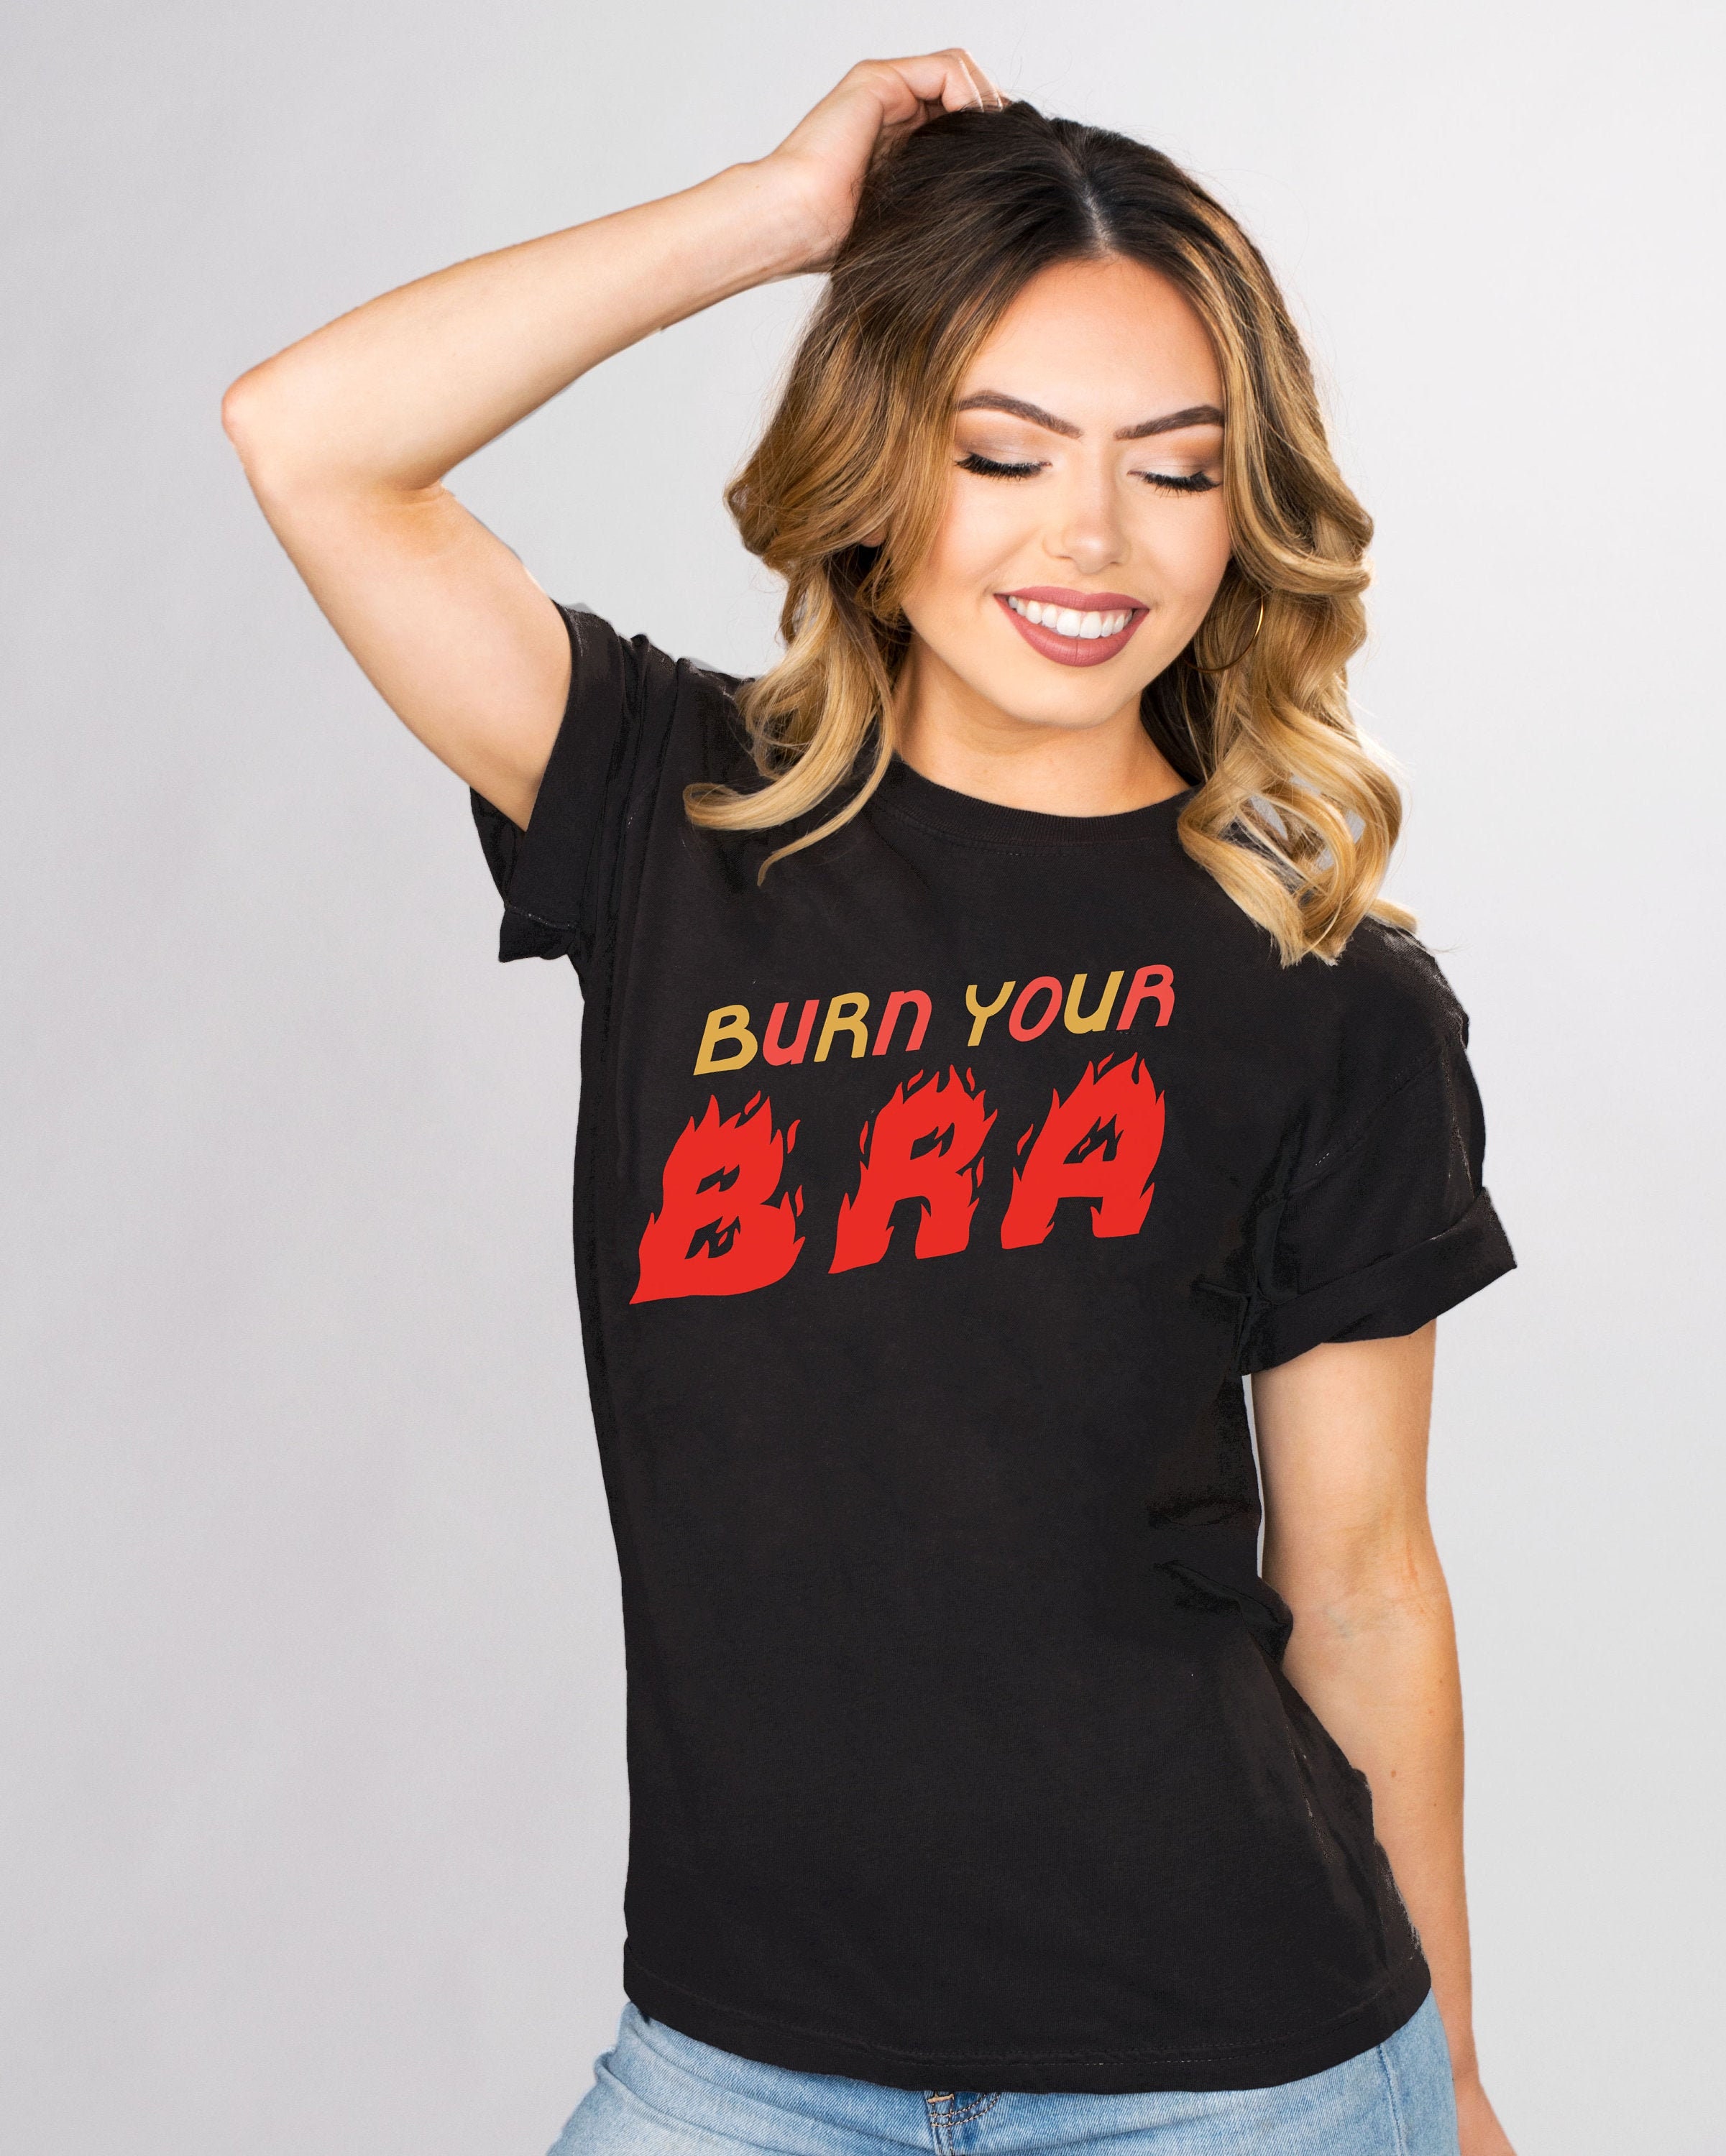 No Bra Women's Tank Top / No Bra Did You Notice / No Bra Club / Adult Humor  Shirt / Please Read the Size Chart 